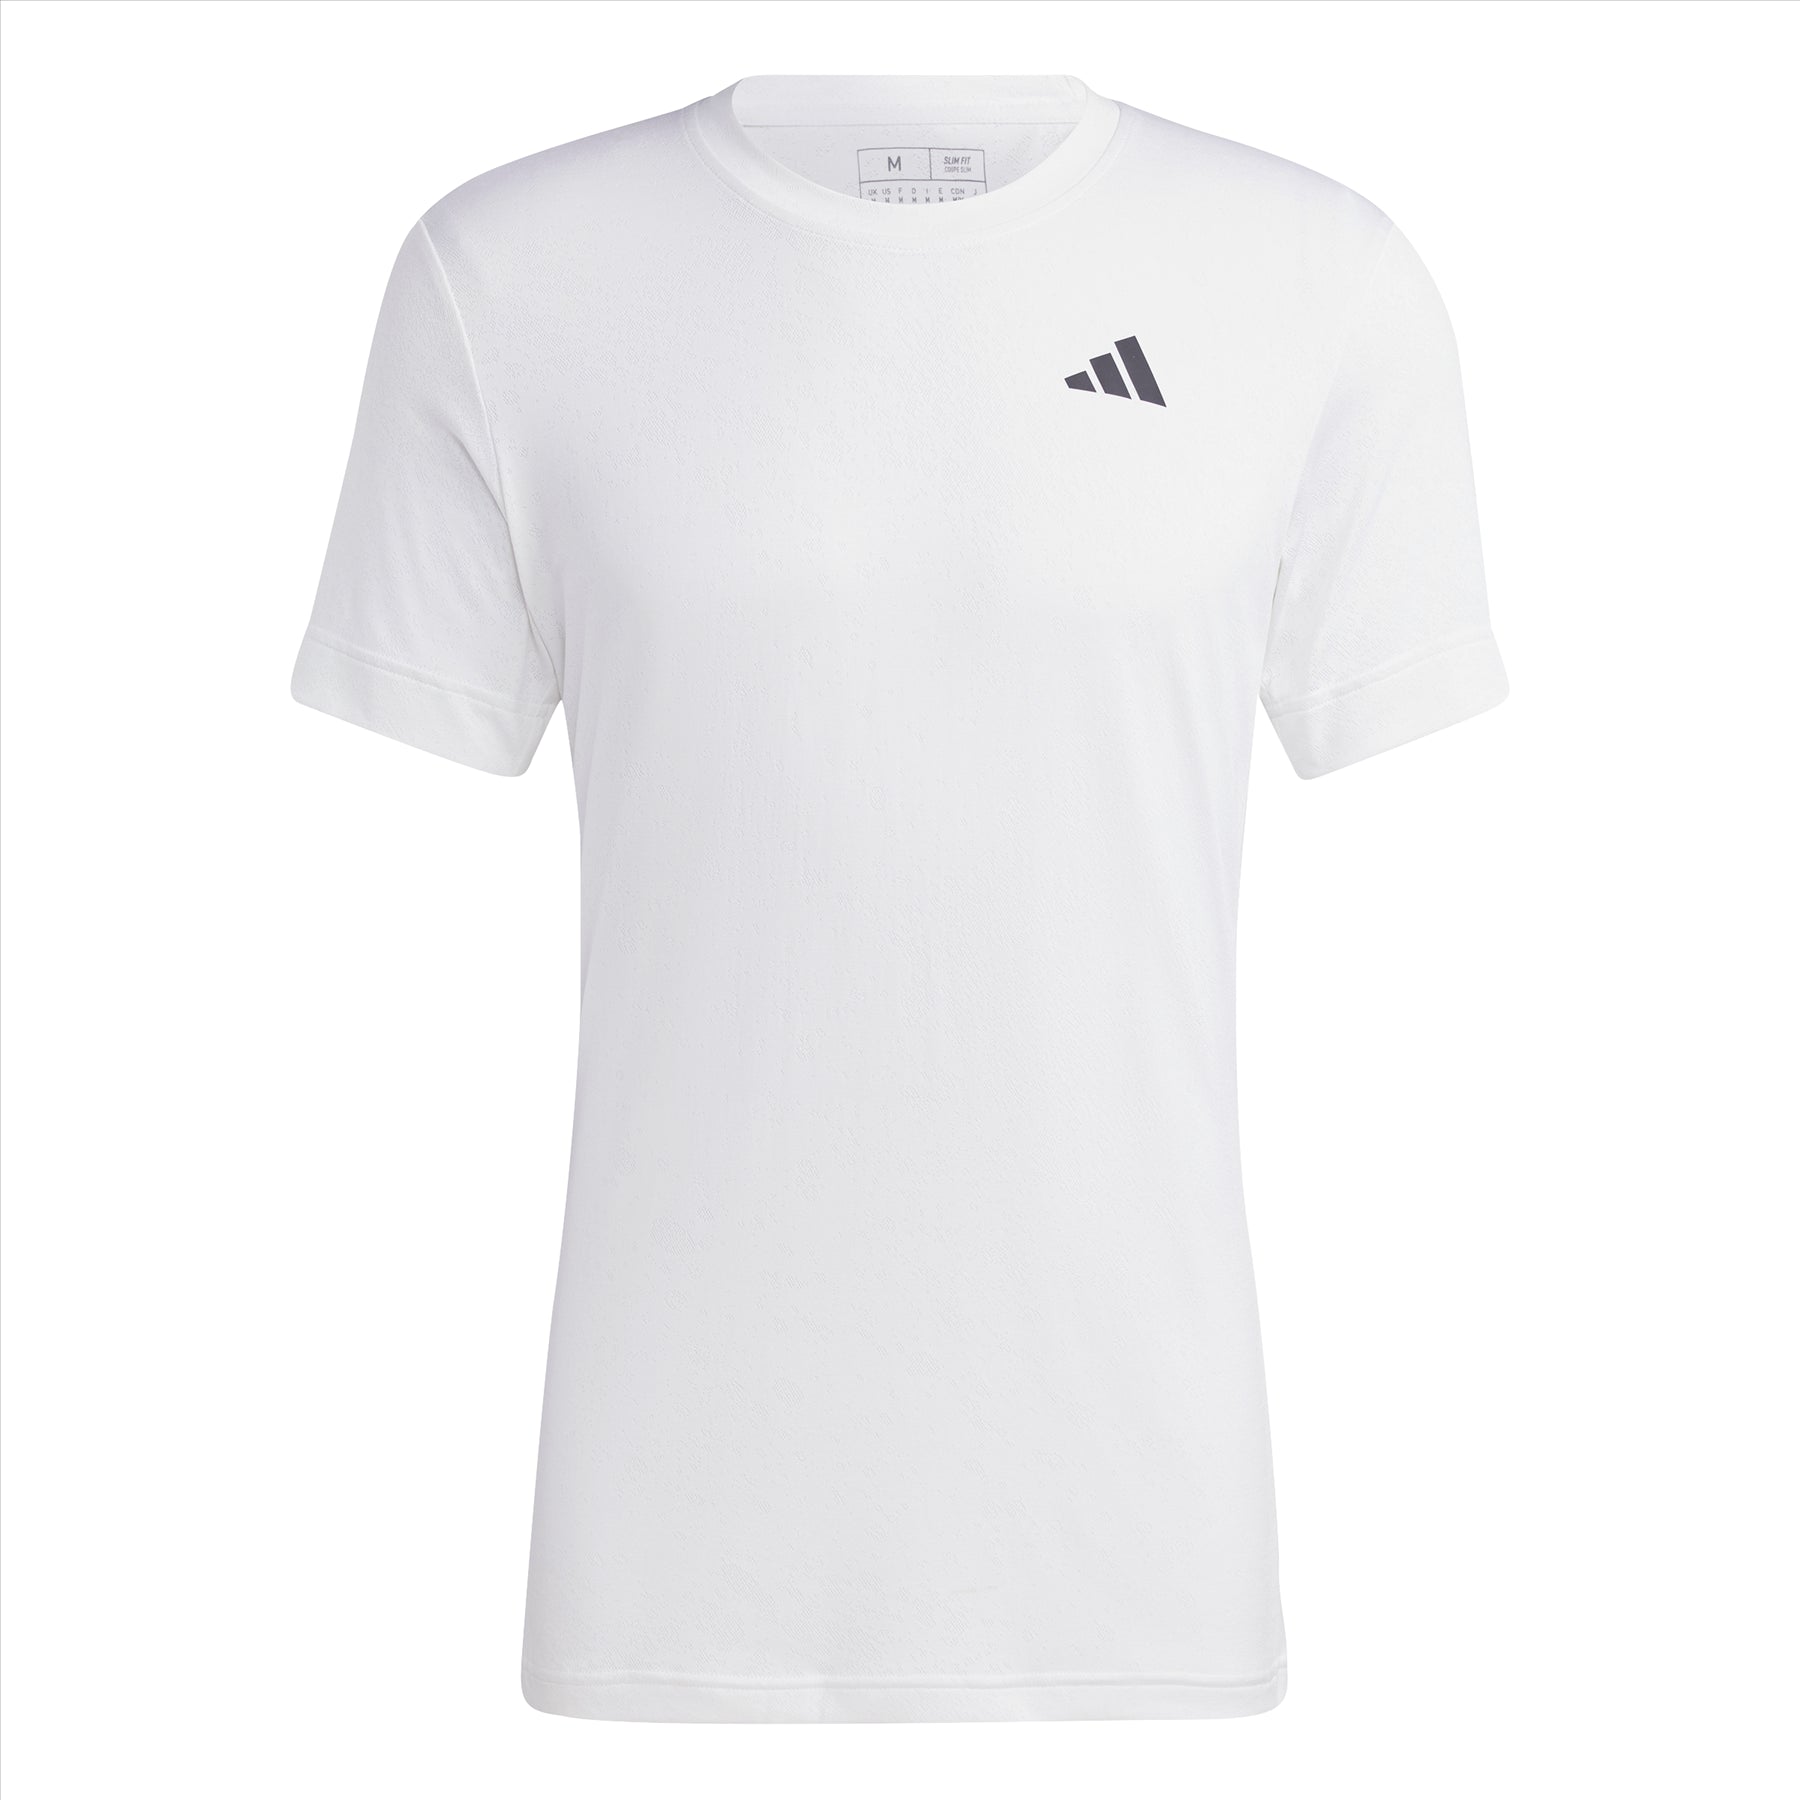 ADIDAS Mens Freelift Tennis T-Shirt - White